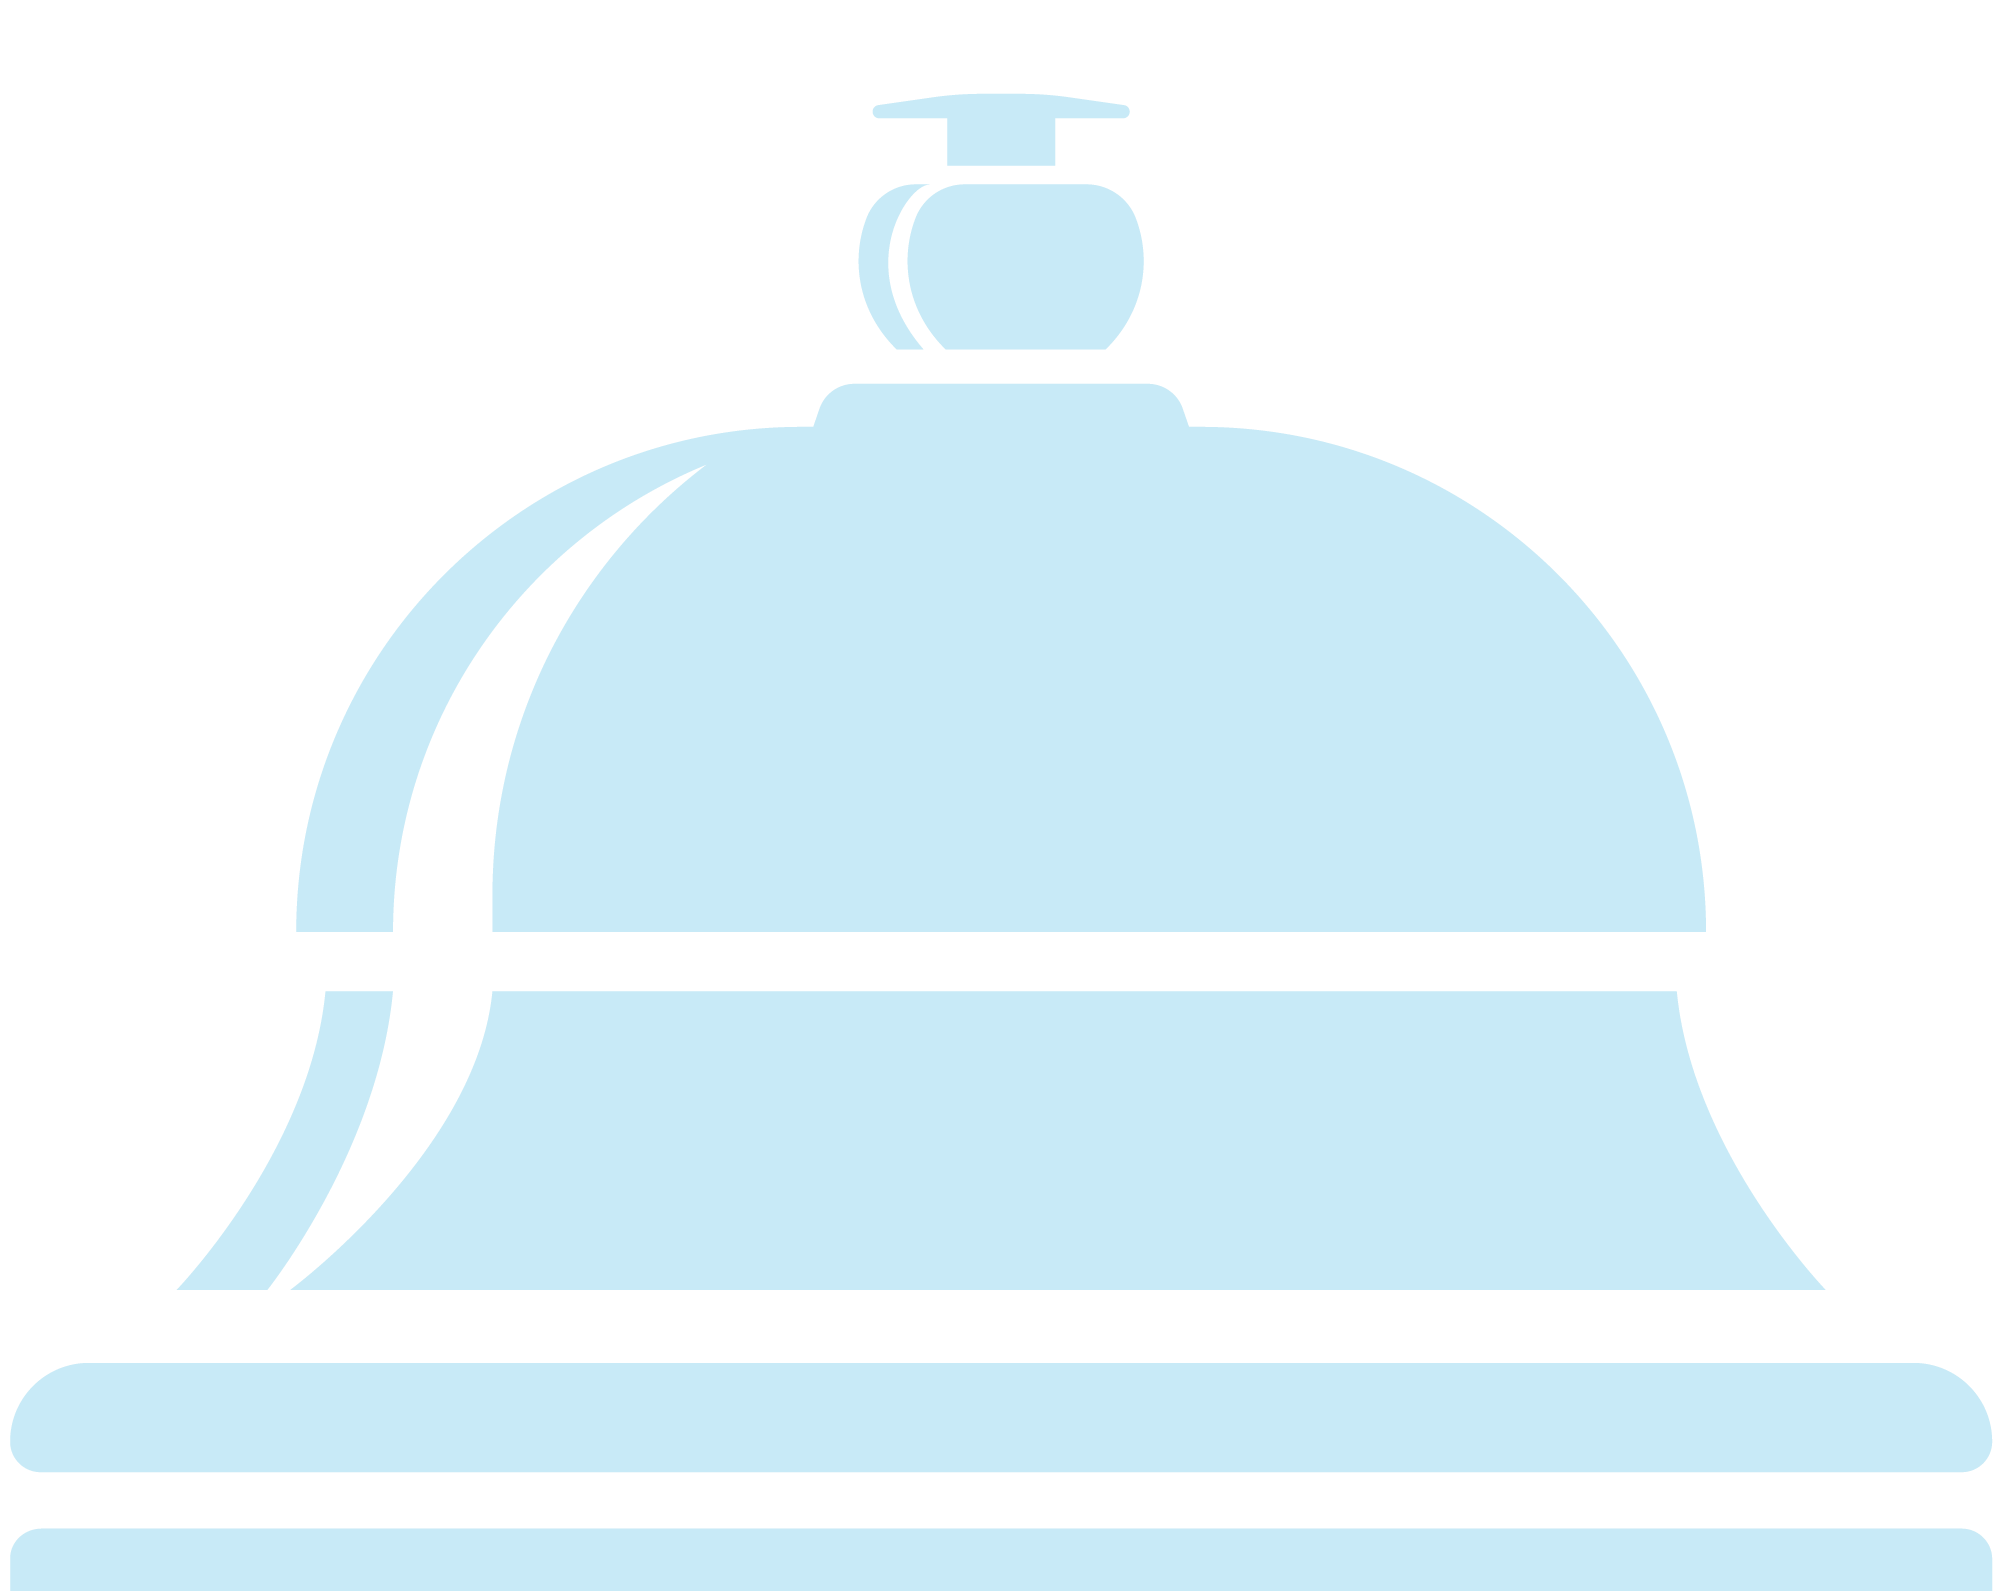 Illustration of a reception bell